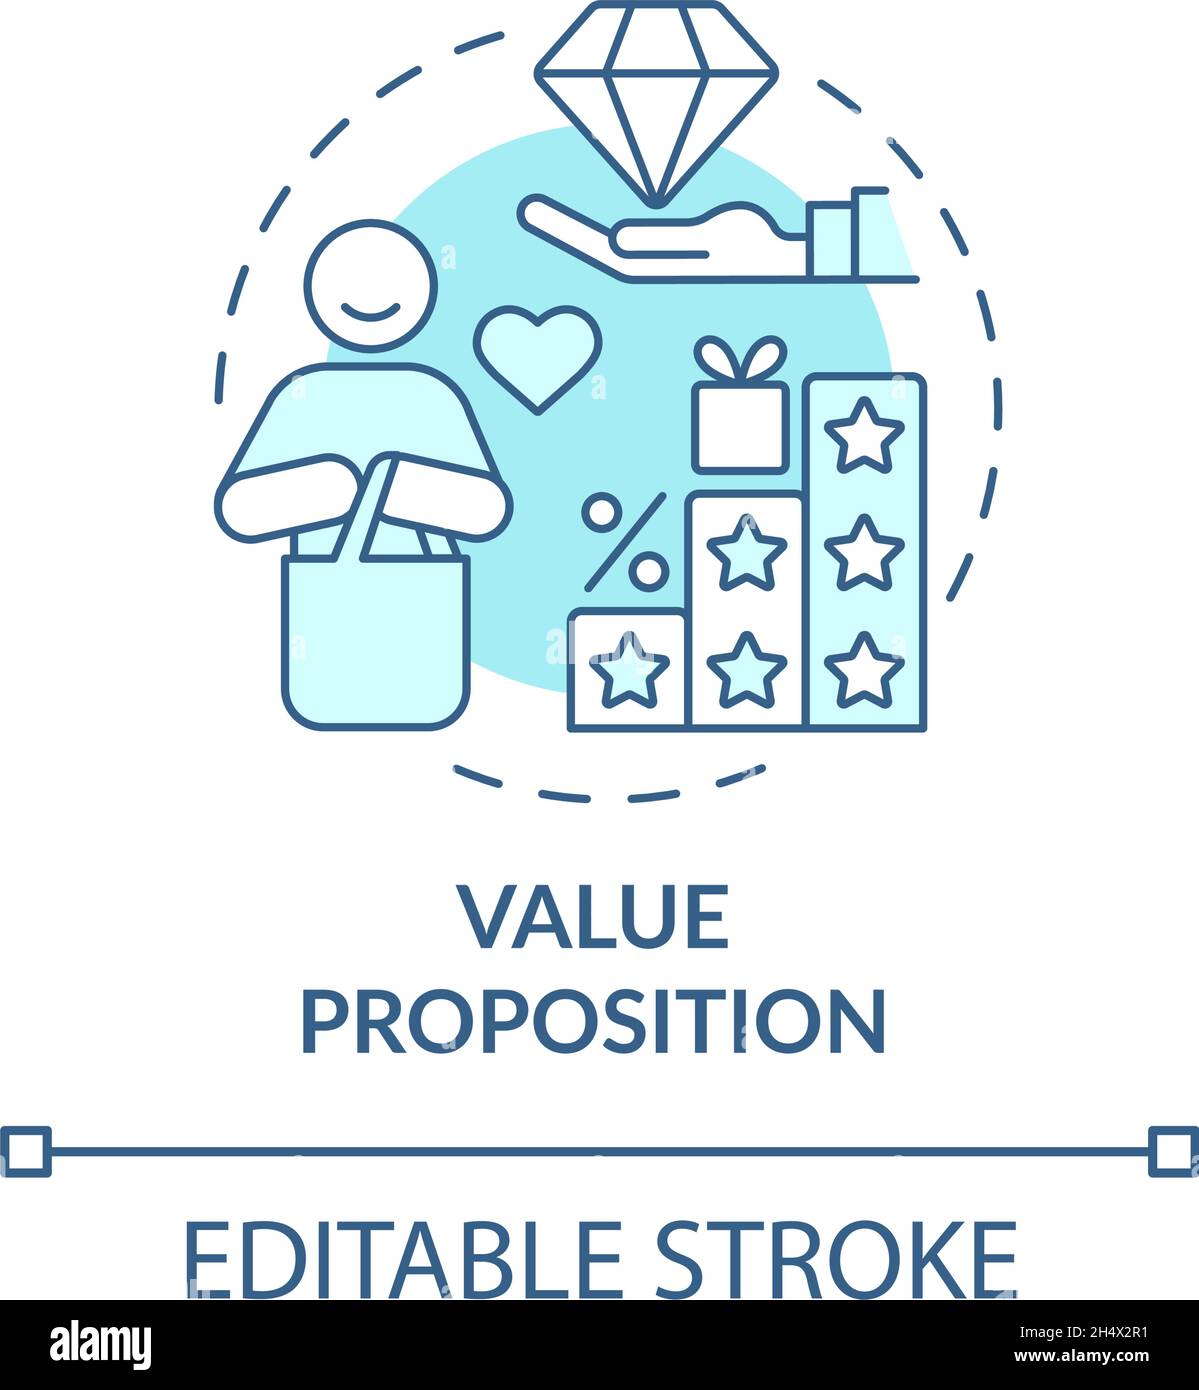 value proposition icon